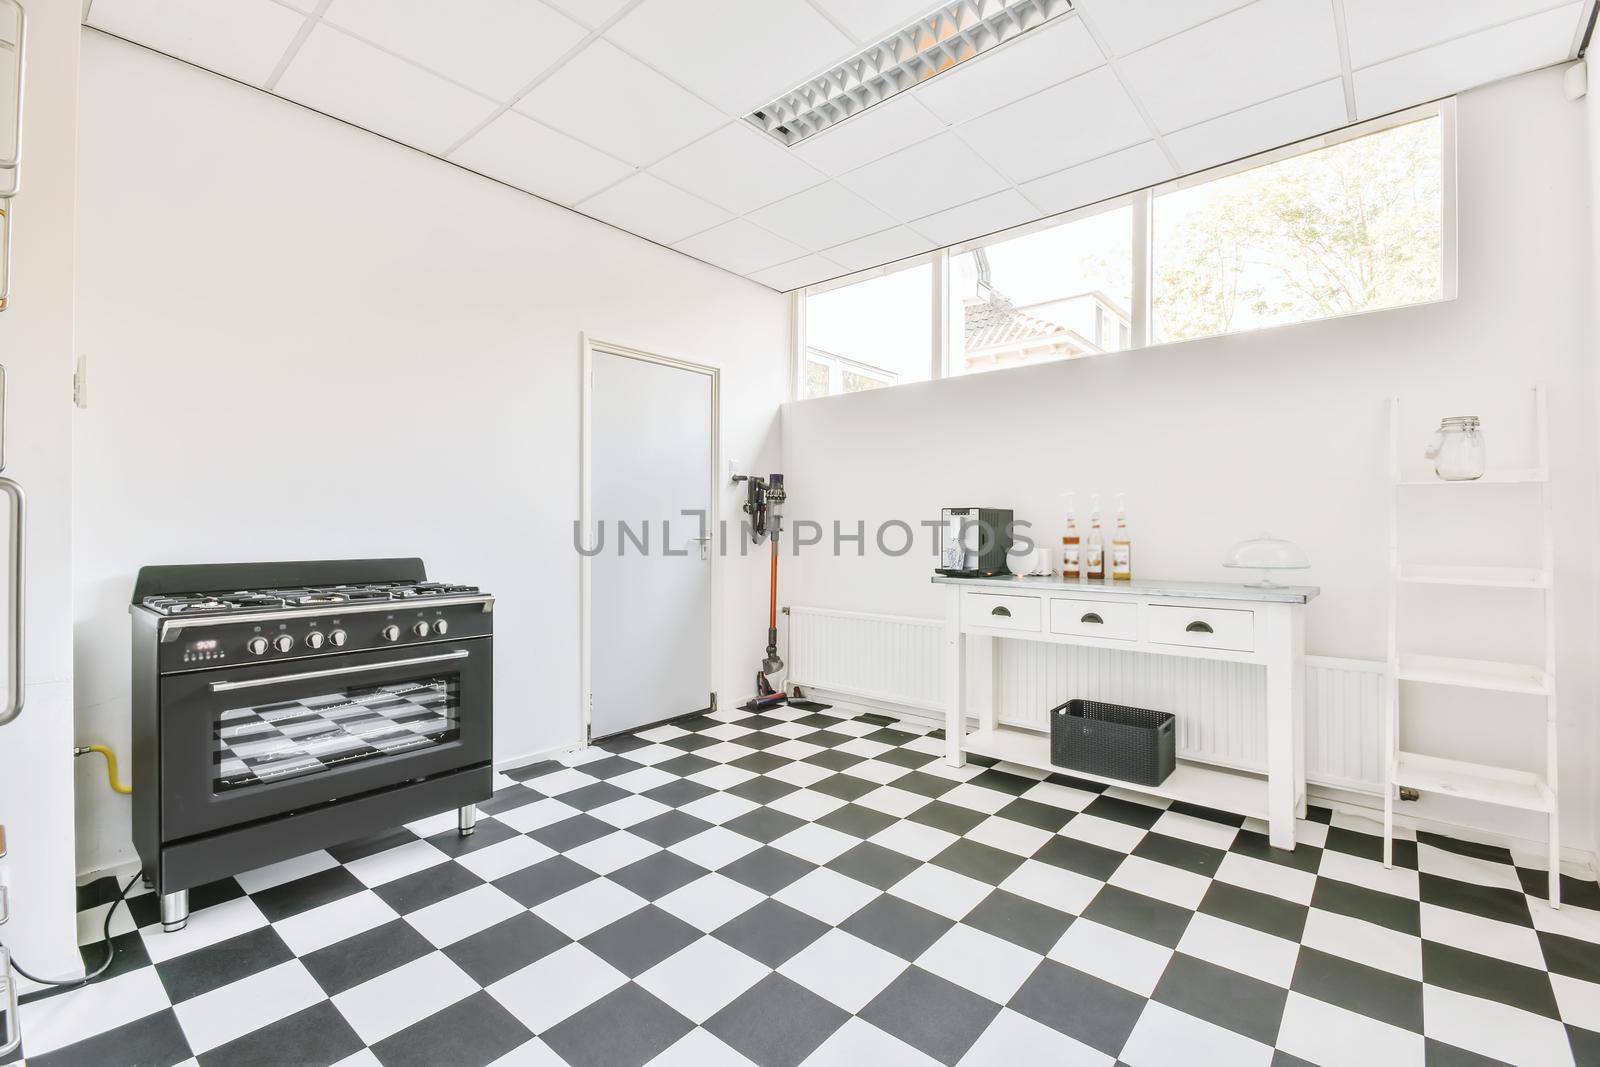 Room with checkerboard floor by casamedia